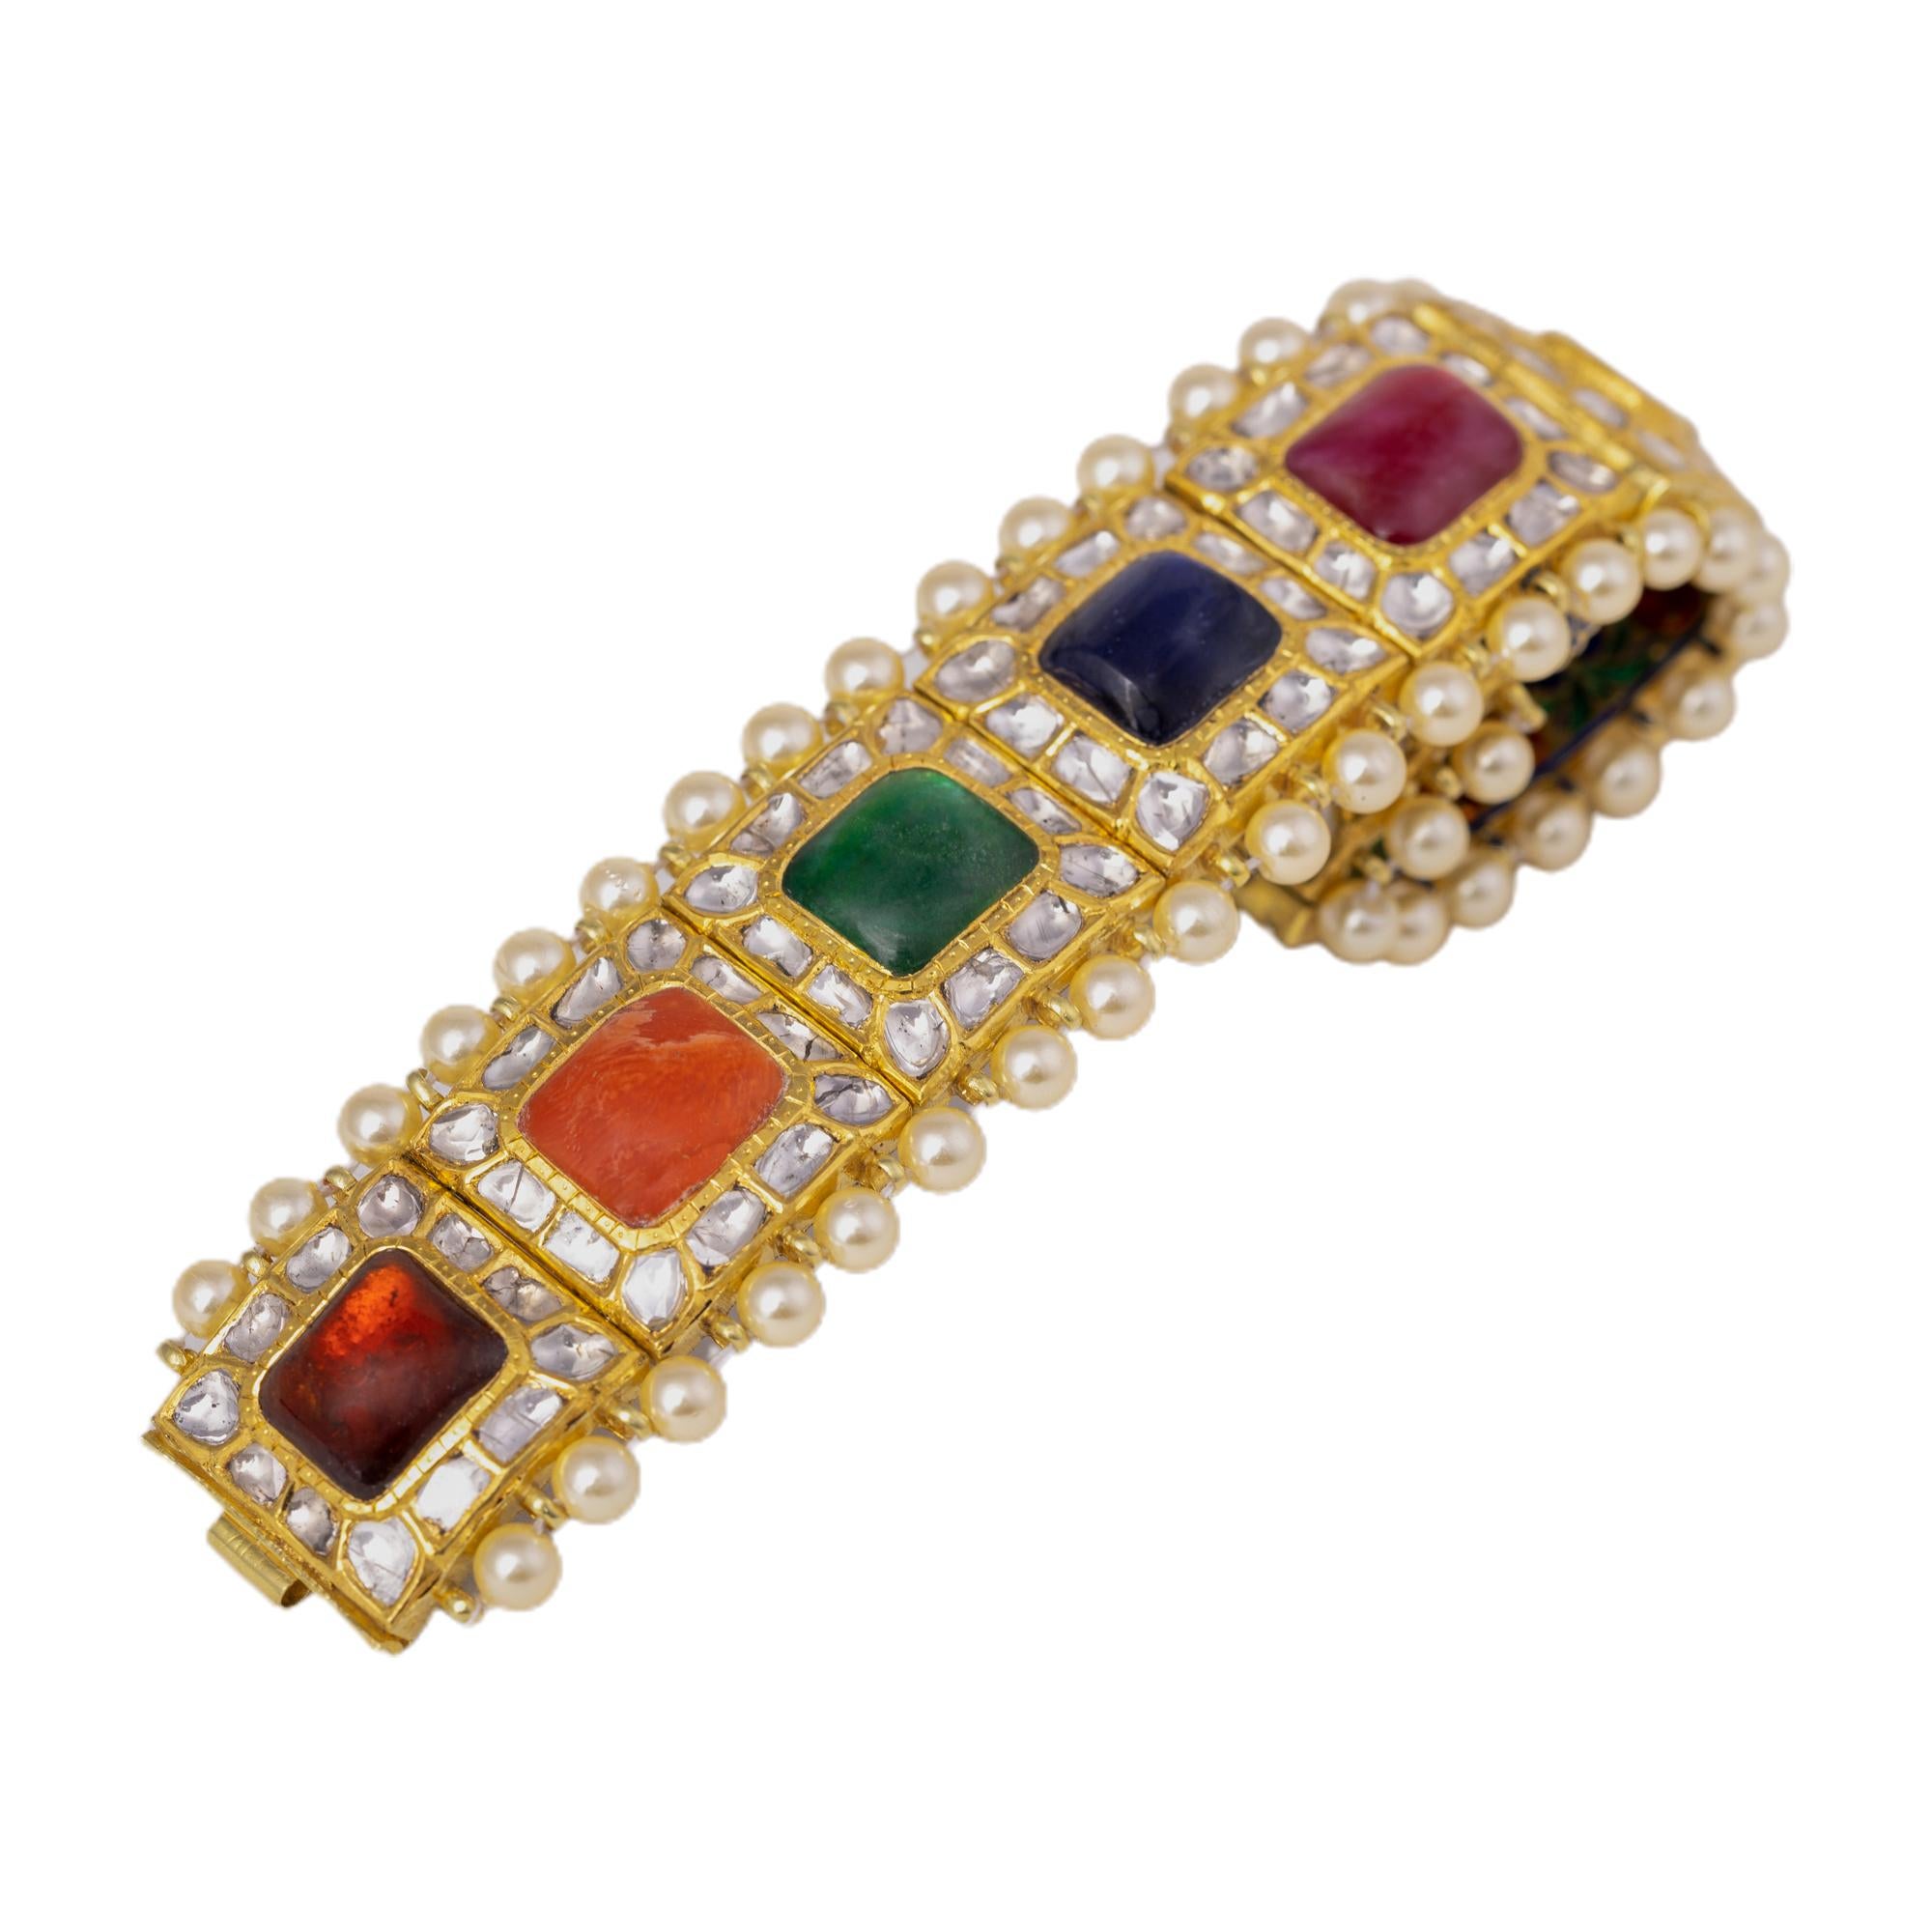 18 Karat Gold Nine Precious Gems Statement Handcrafted Bracelet with Enamel Work

This impeccable antiquated Mughal era style hand-crafted Navratan (nine) gems and polki diamond cluster bracelet is sensational. Navratnas of the nine gemstones